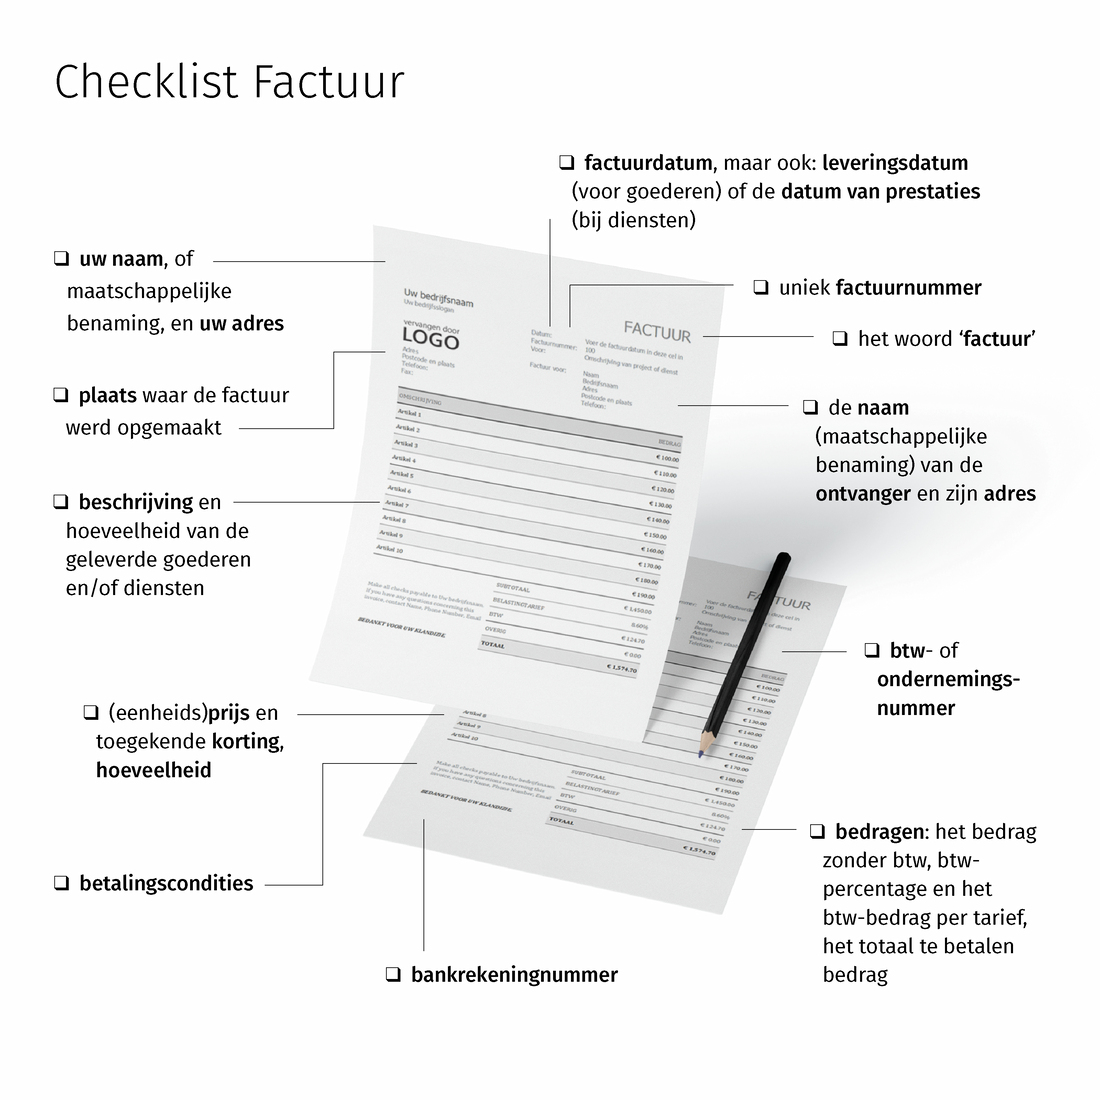 Checklist factuur